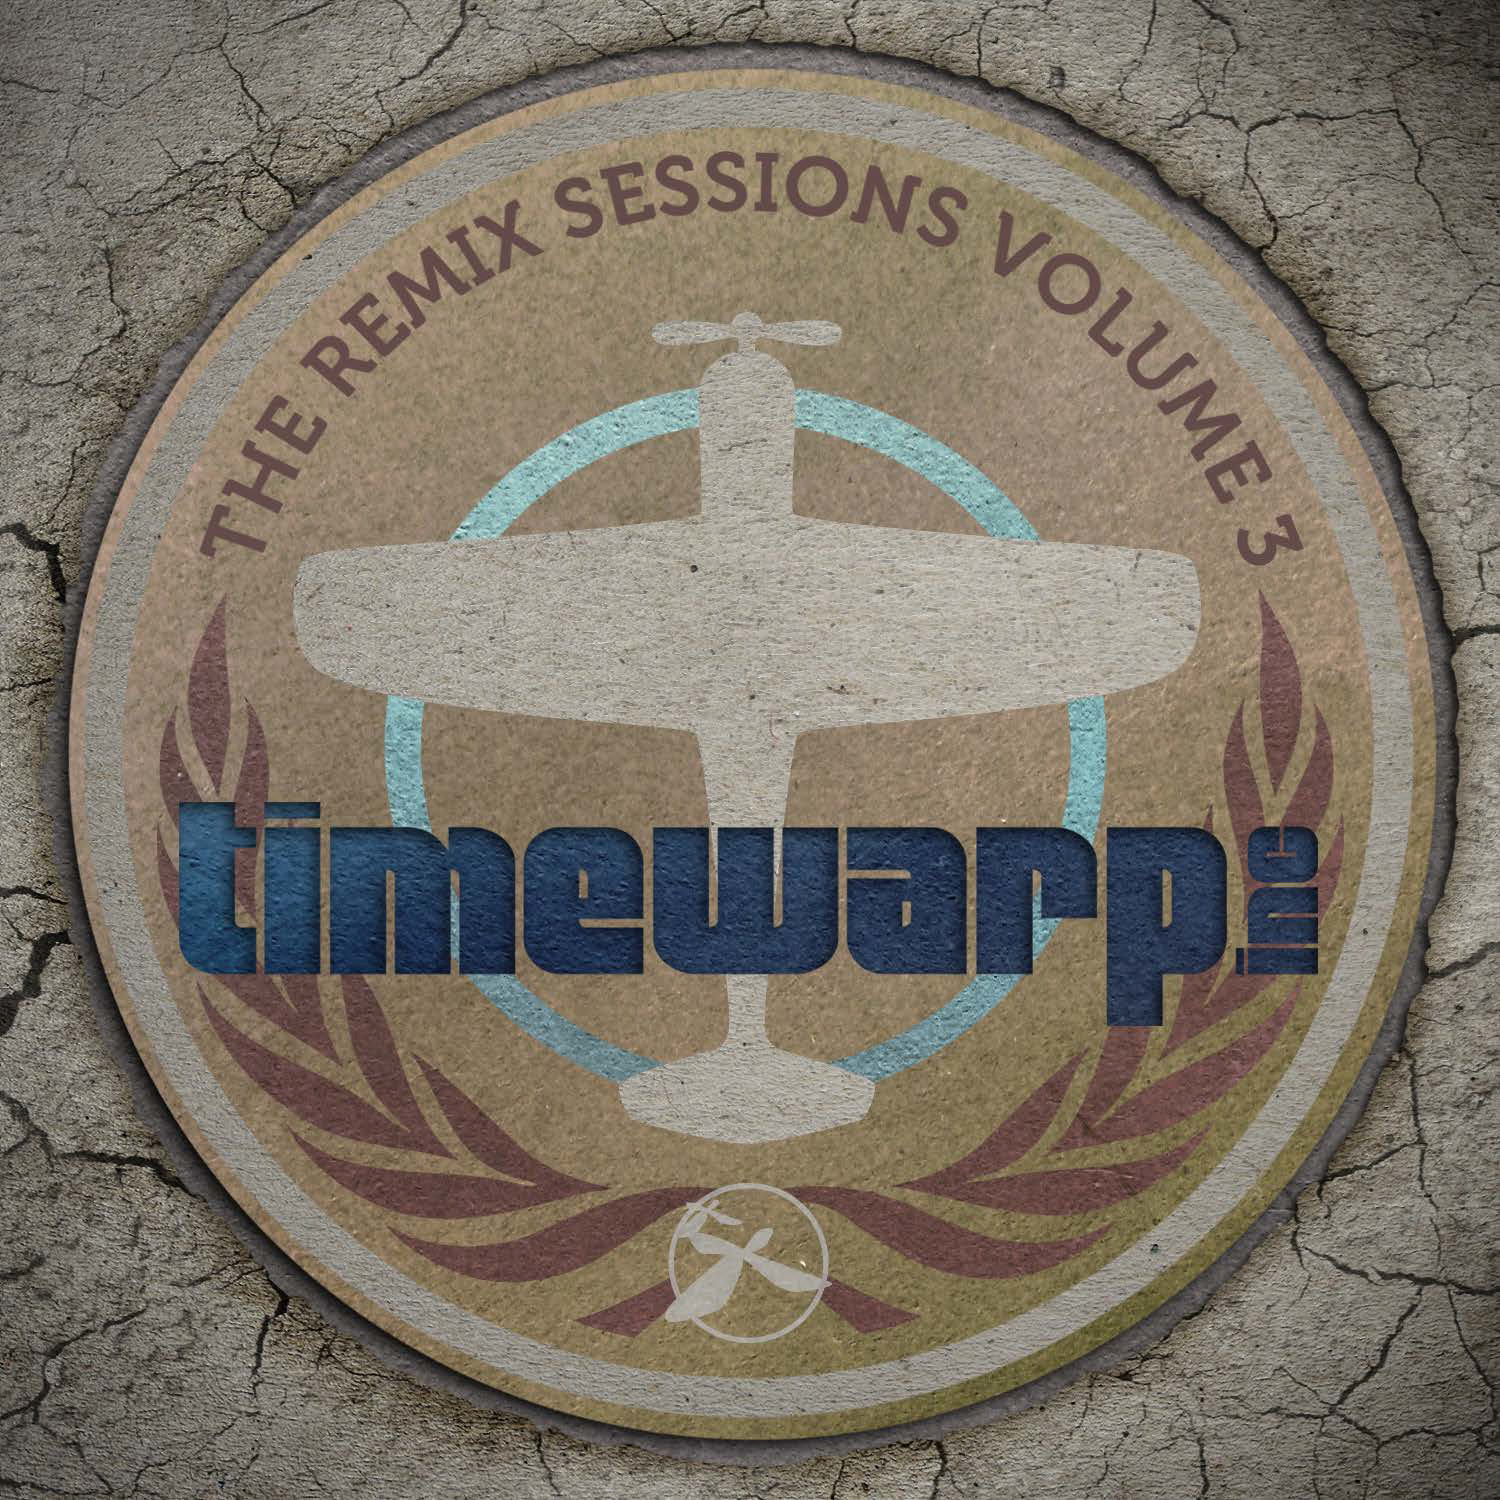 Electric Duo (Timewarp inc Remix)